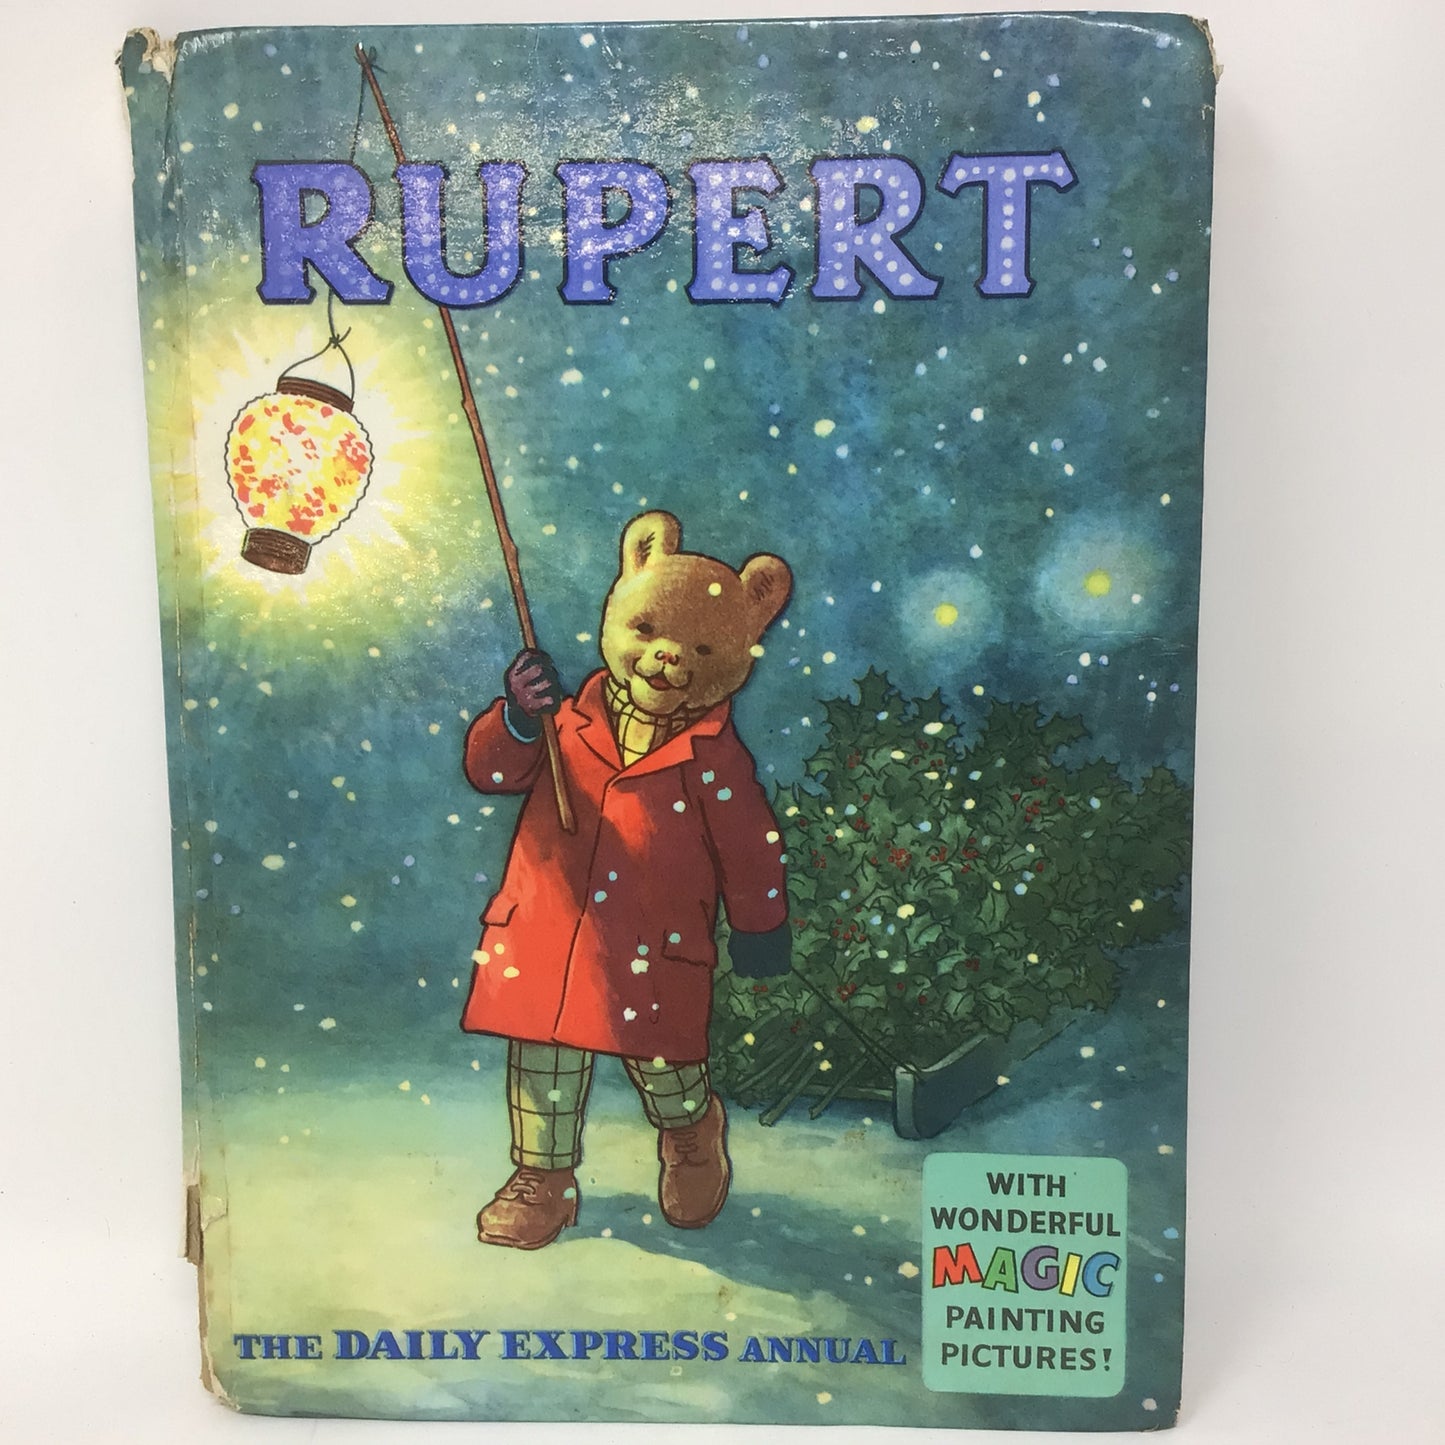 Set of 2 Vintage Rupert Bear Hardcover Books